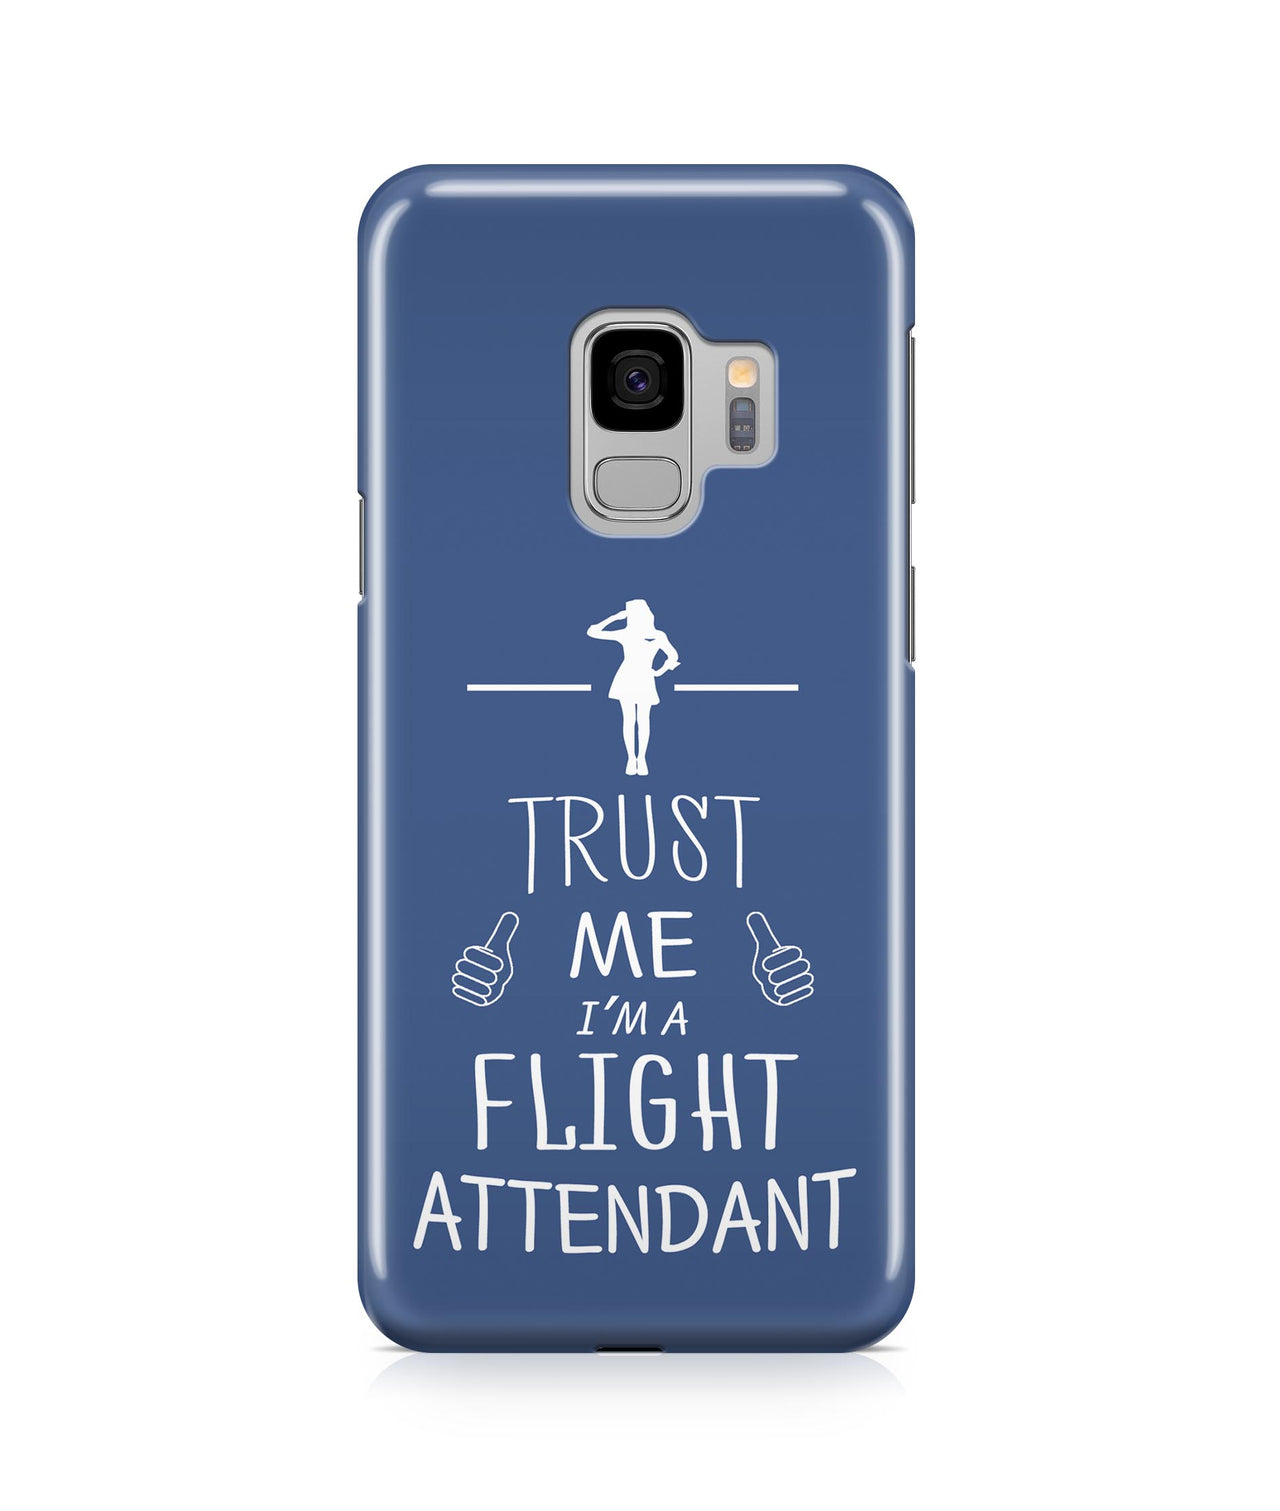 Trust Me I’m a Flight Attendant Designed Samsung J Cases